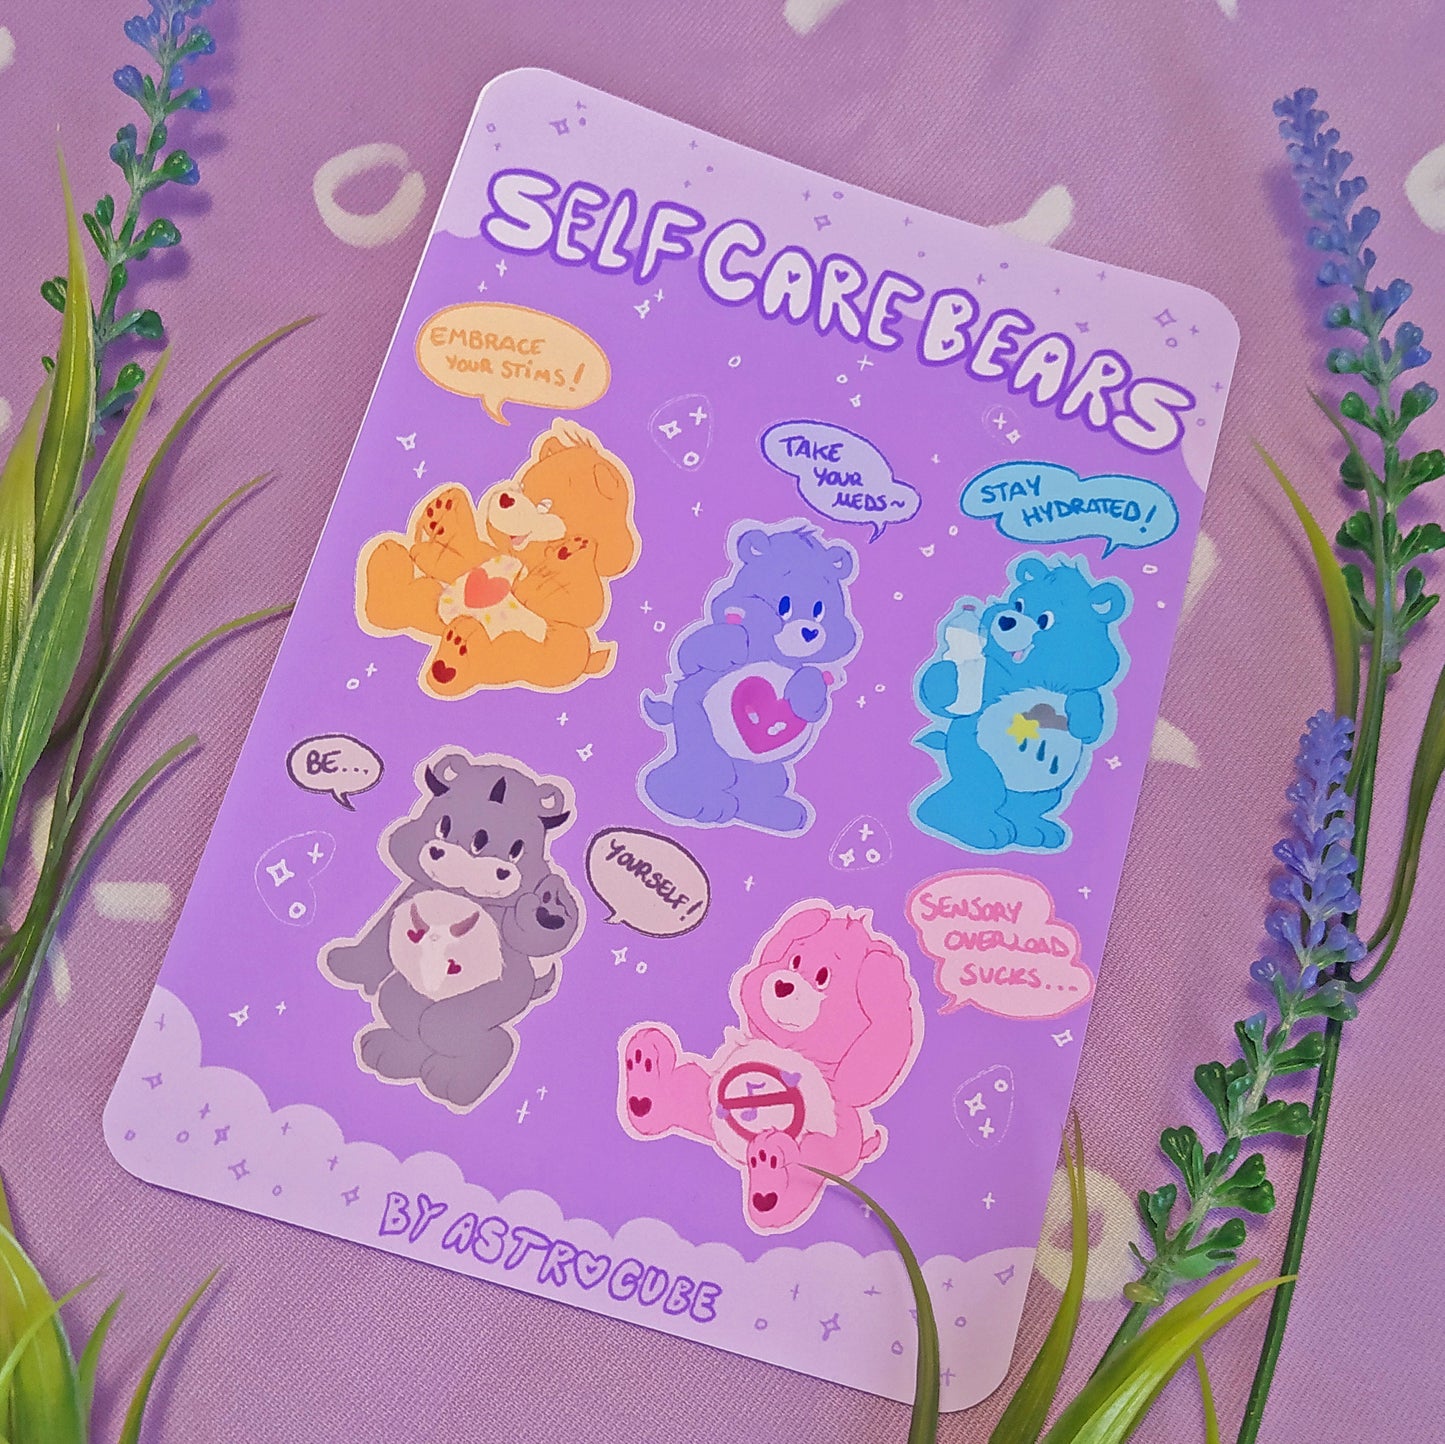 Self care bears sticker sheet